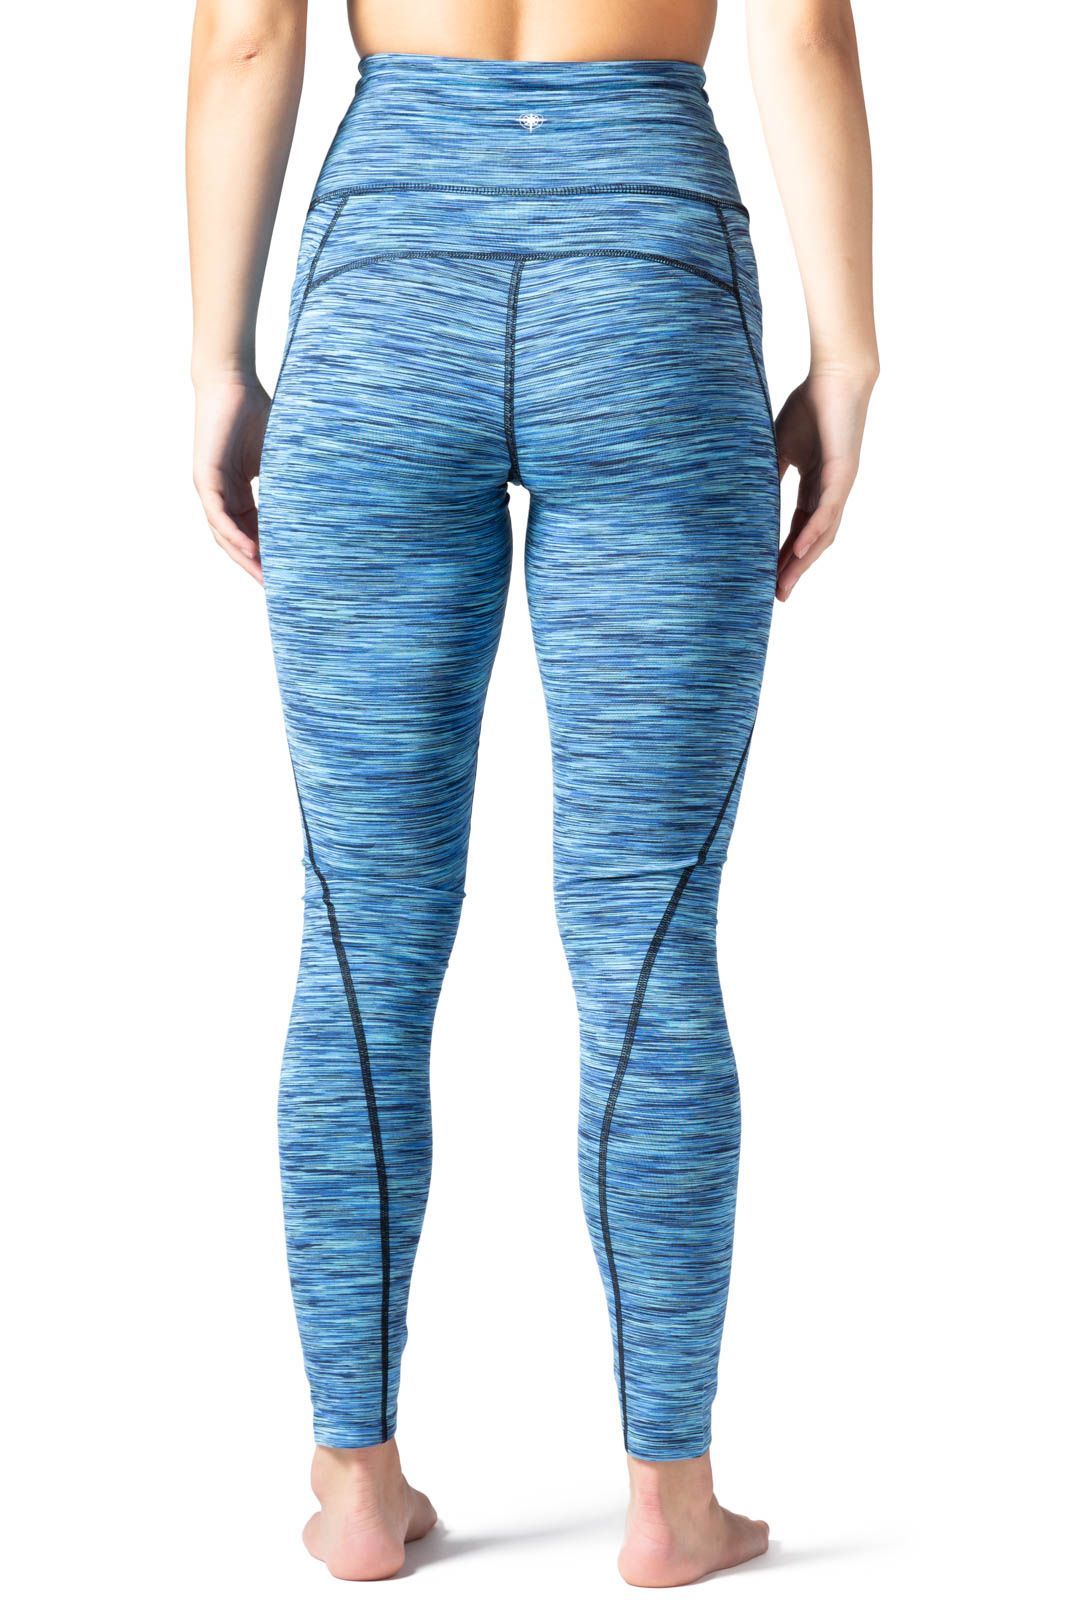 Ultra Stretch Rib Cross Over Leggings with side pocket, Azure Blue – Sundry